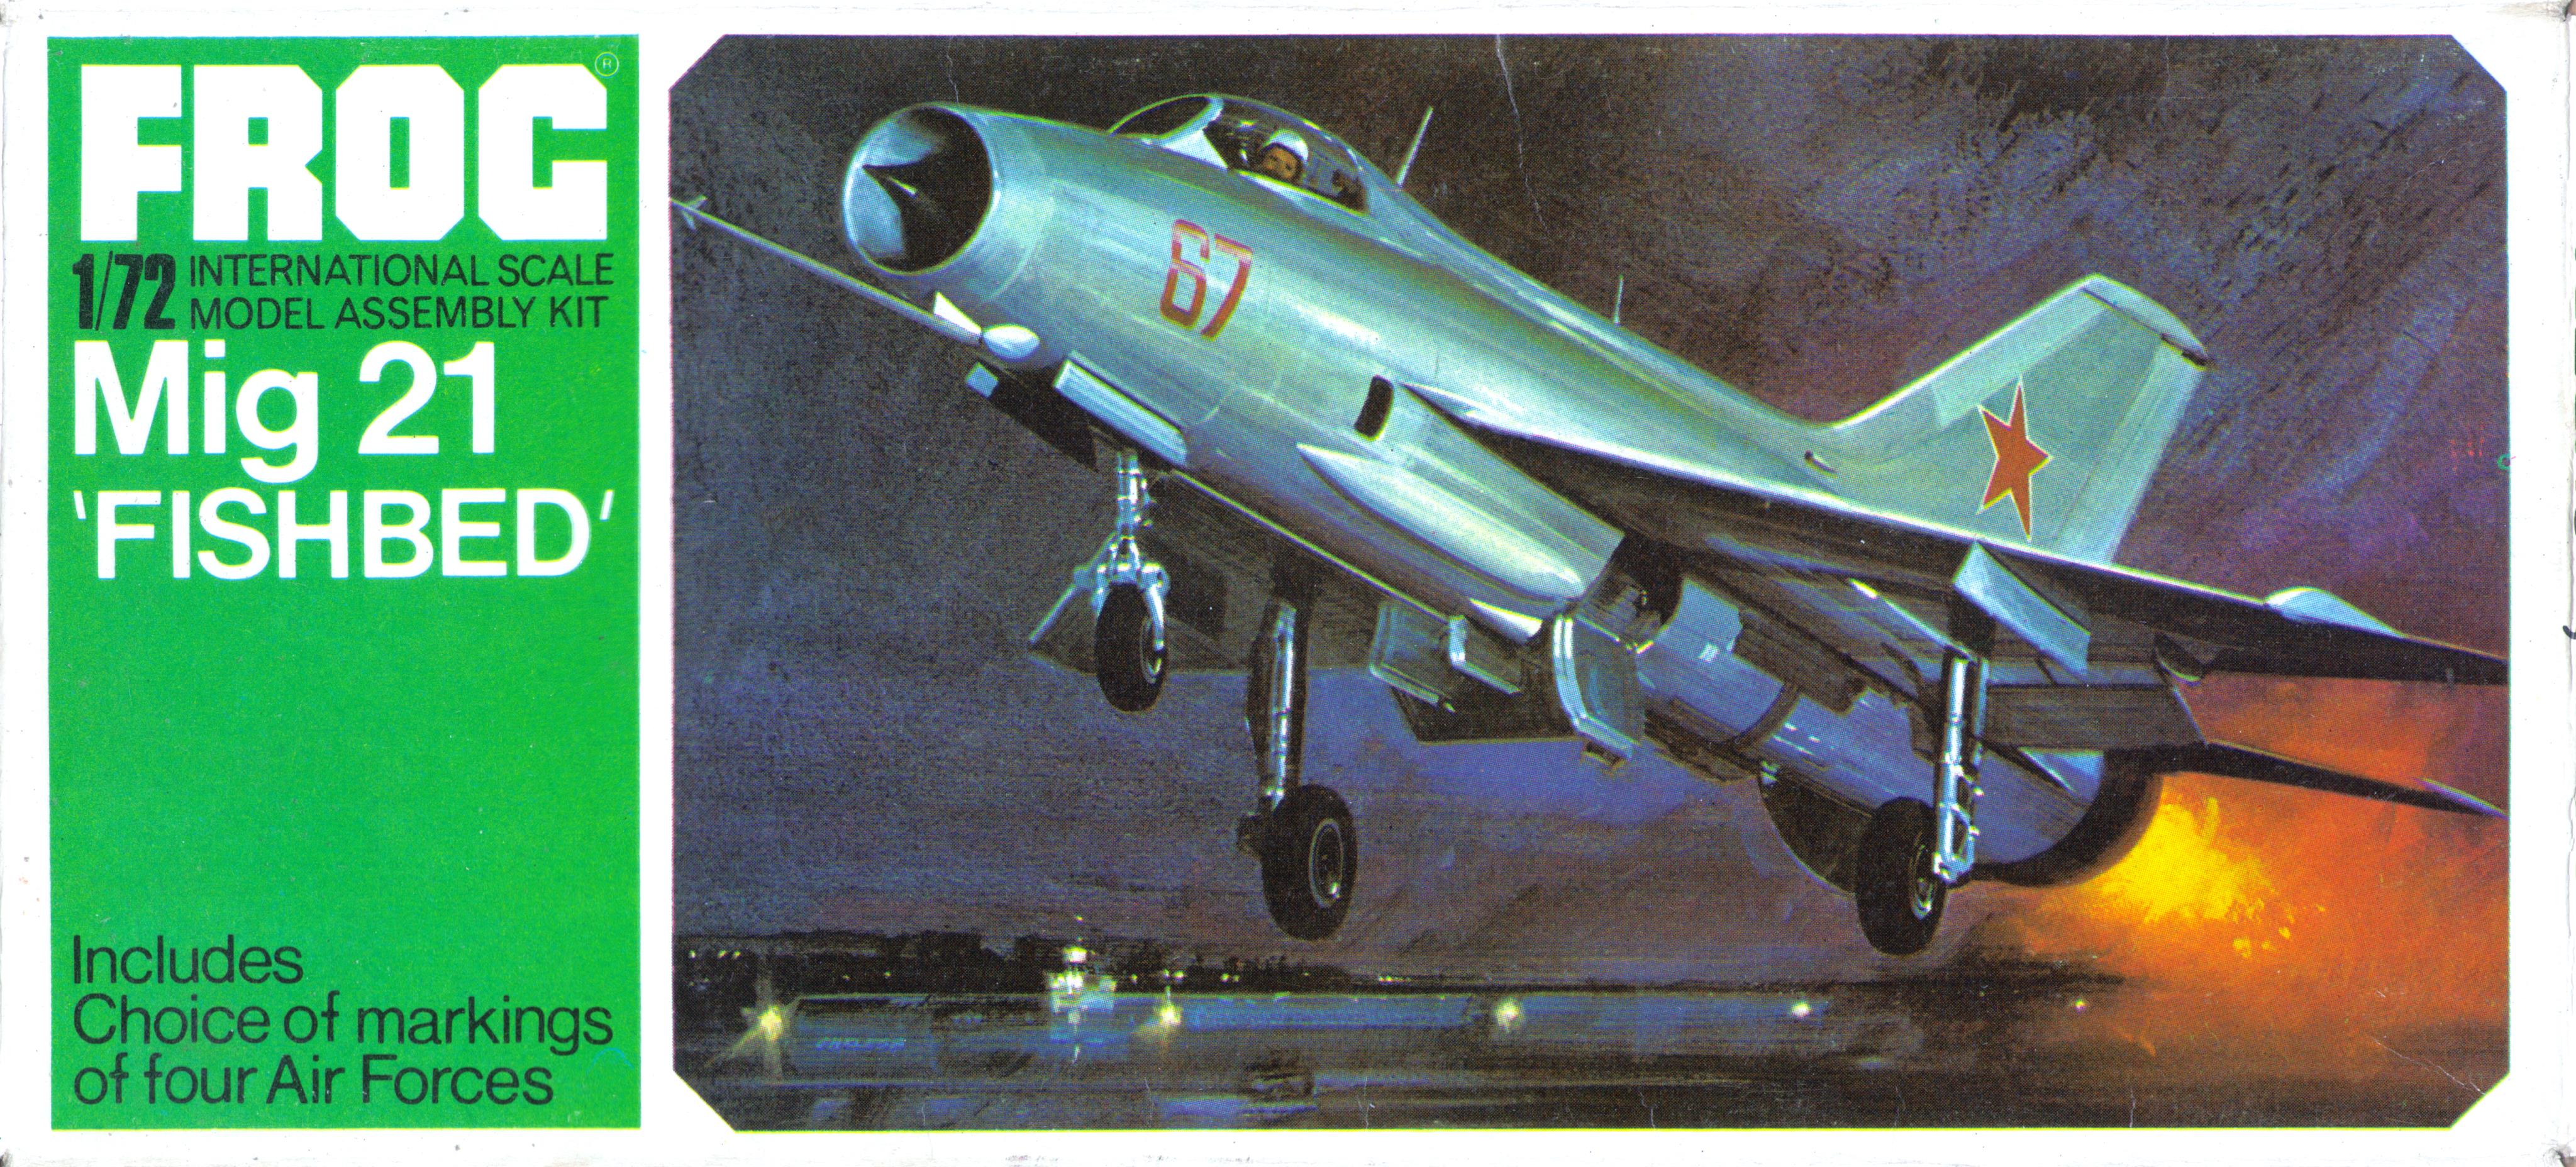  Коробка FROG F263 MiG-21 Fishbed, Rovex Tri-ang Limited, 1968-69